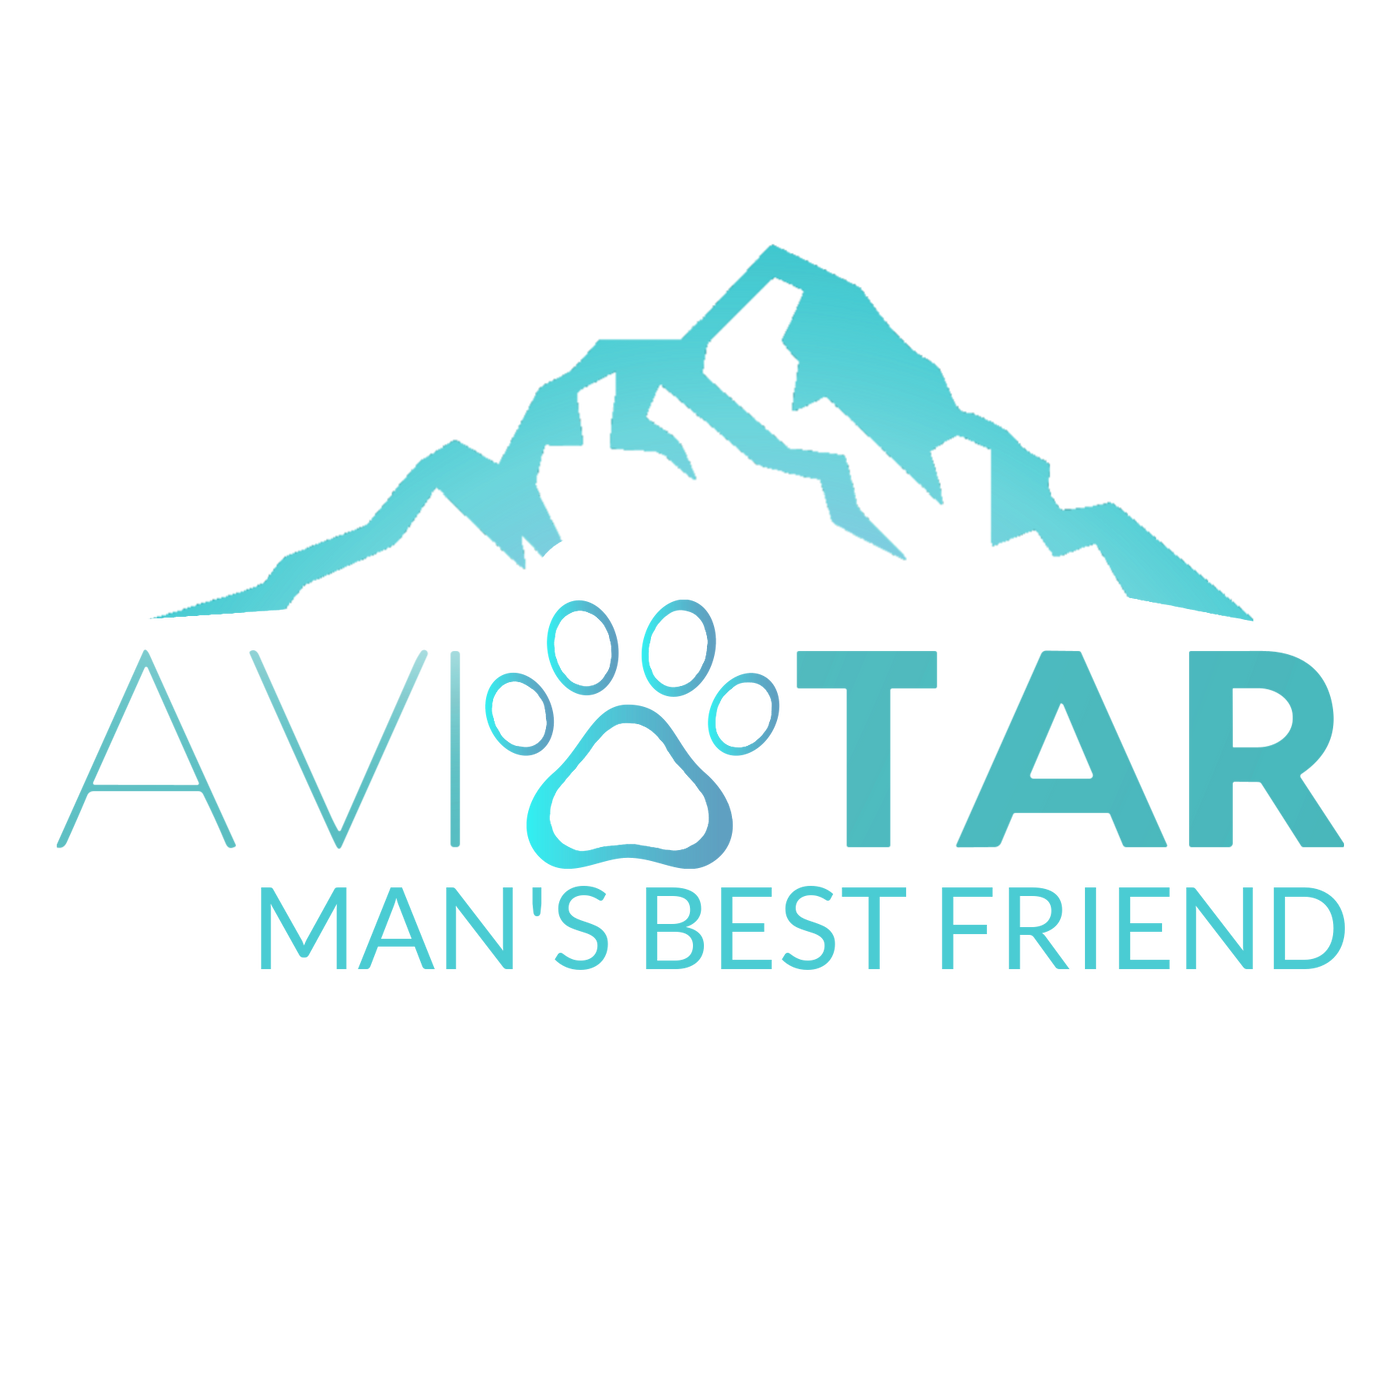 Avitar: Man's Best Friend